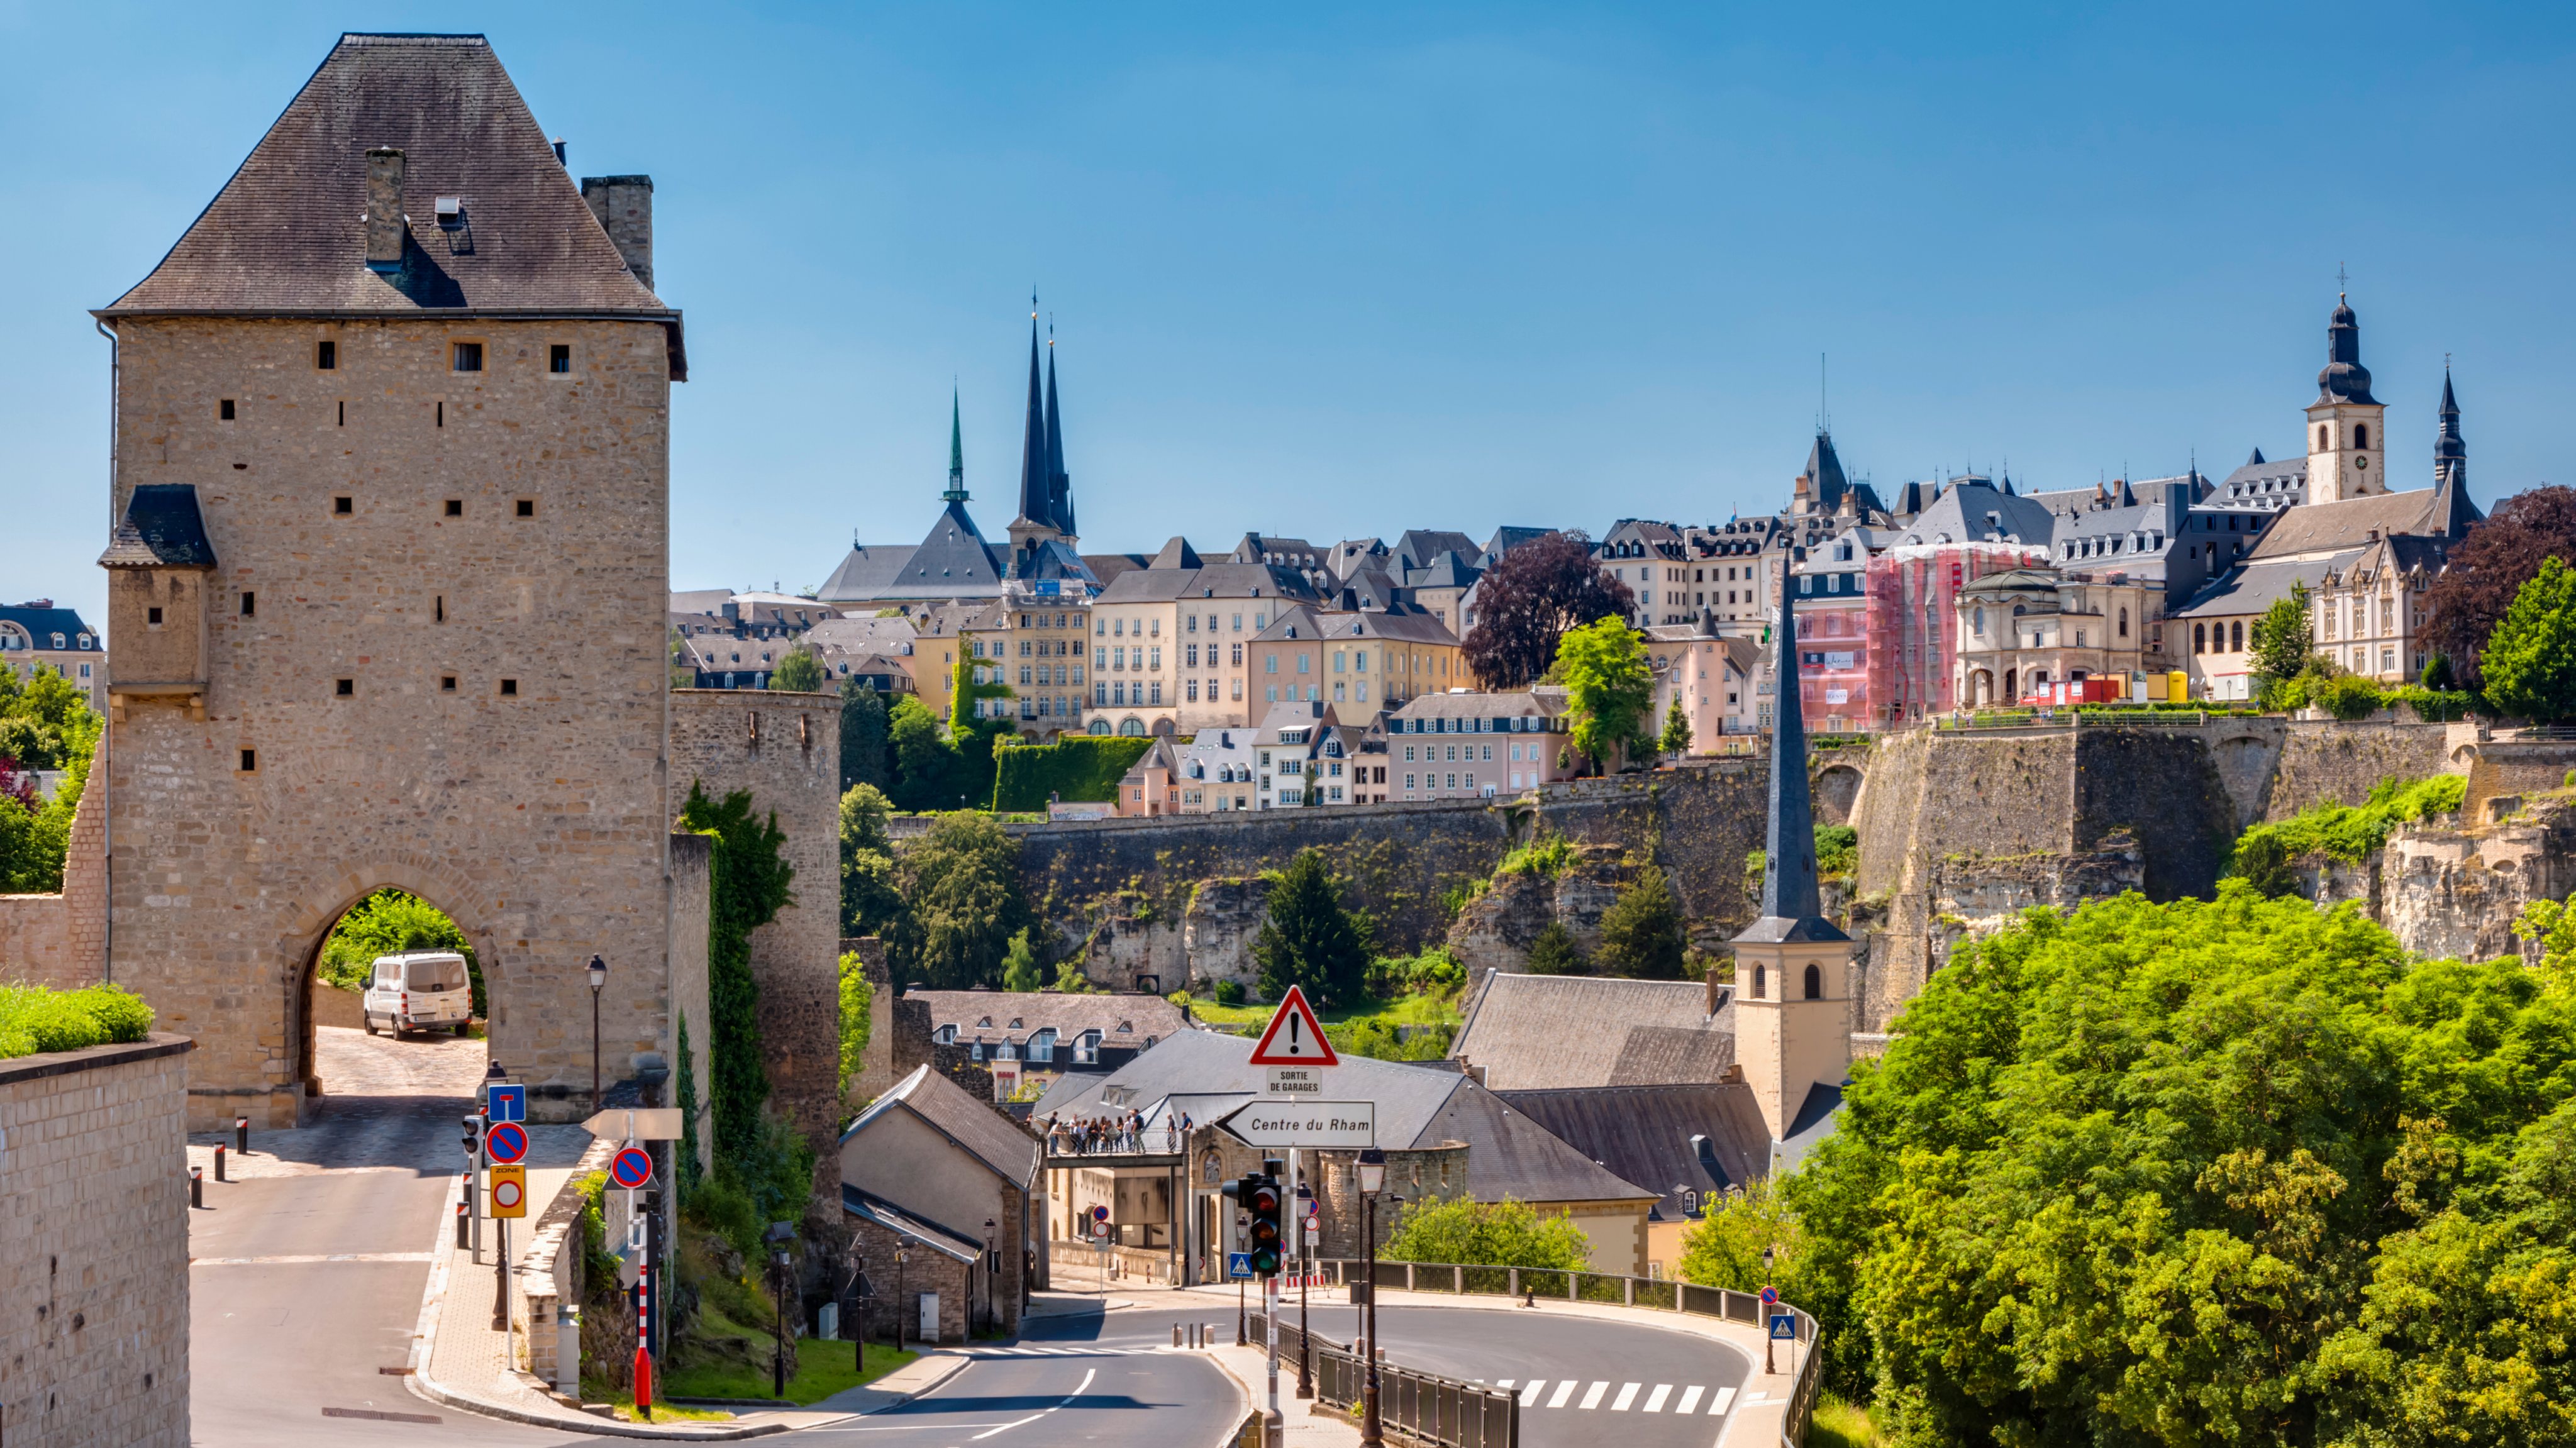 Luxembourg City skyline